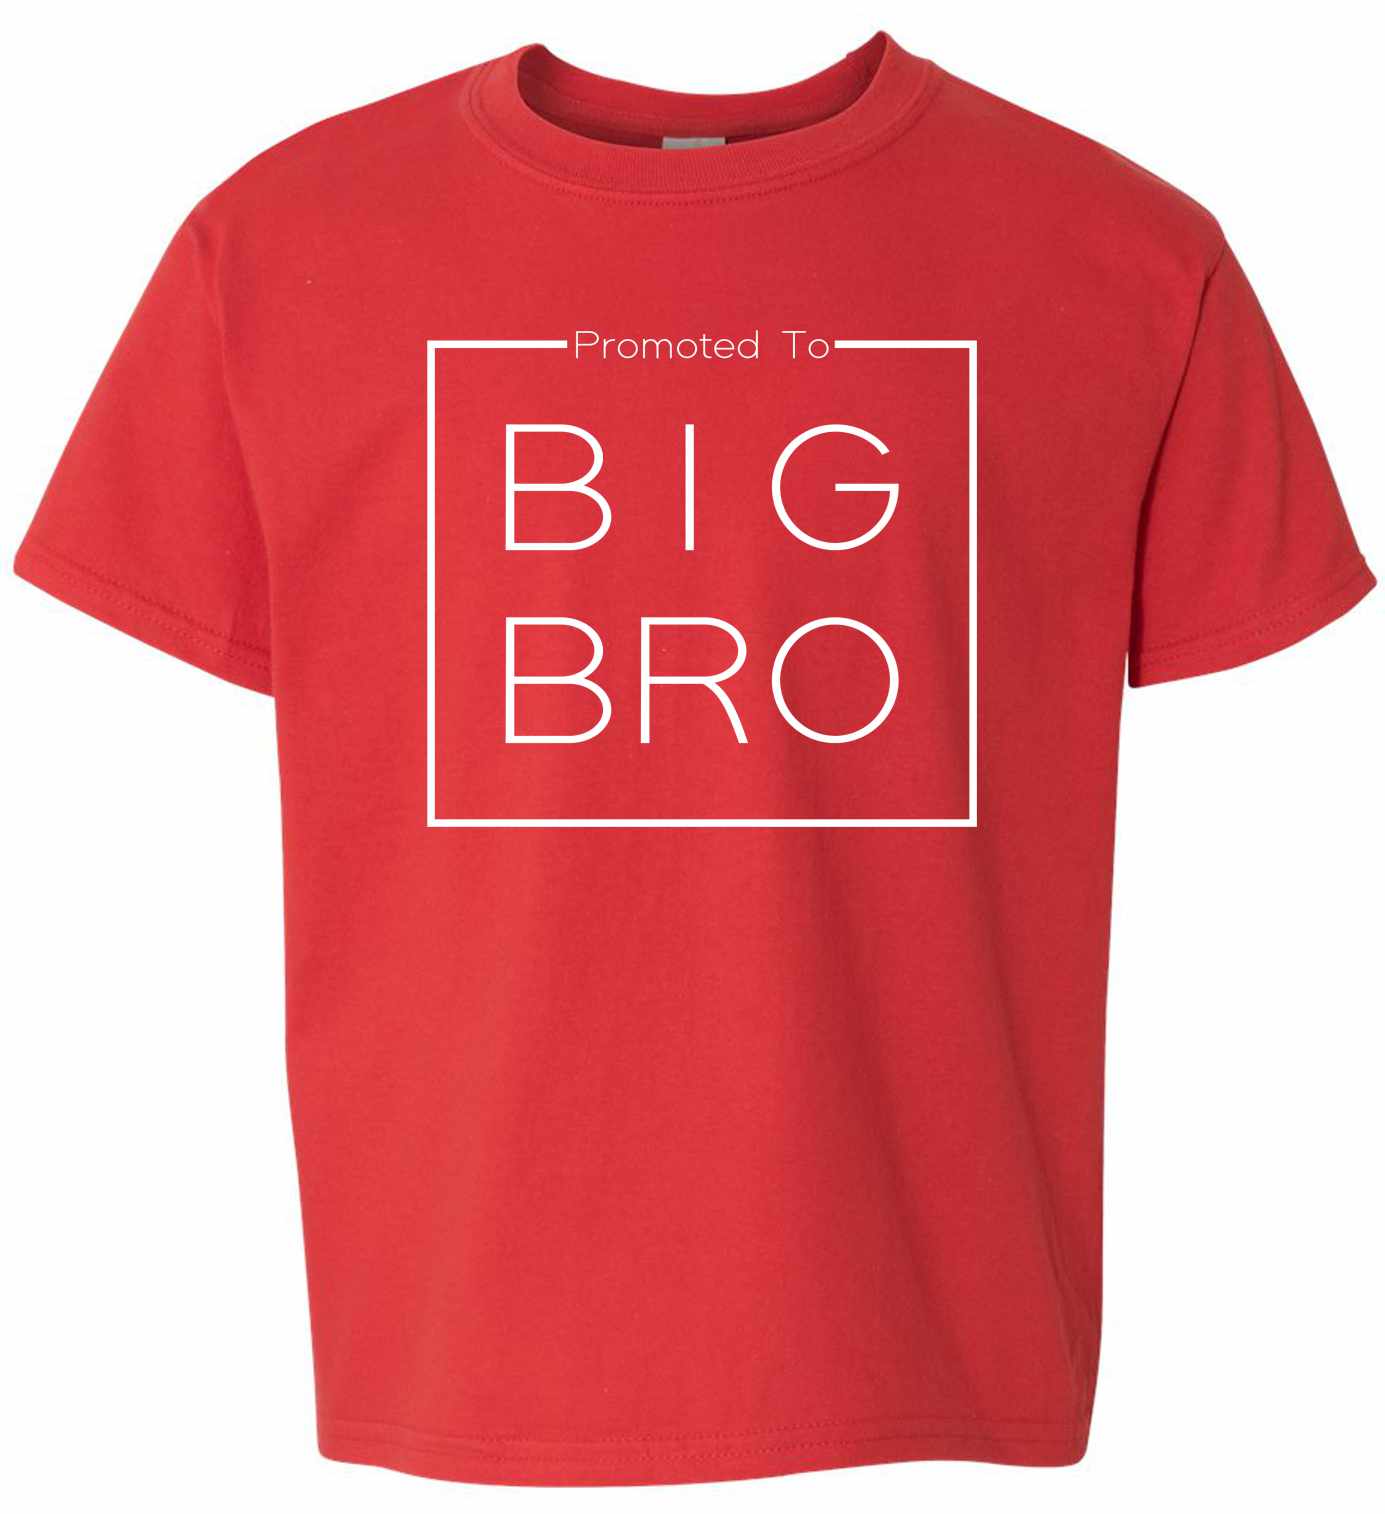 Promoted to Big Bro- Big Brother Box on Kids T-Shirt